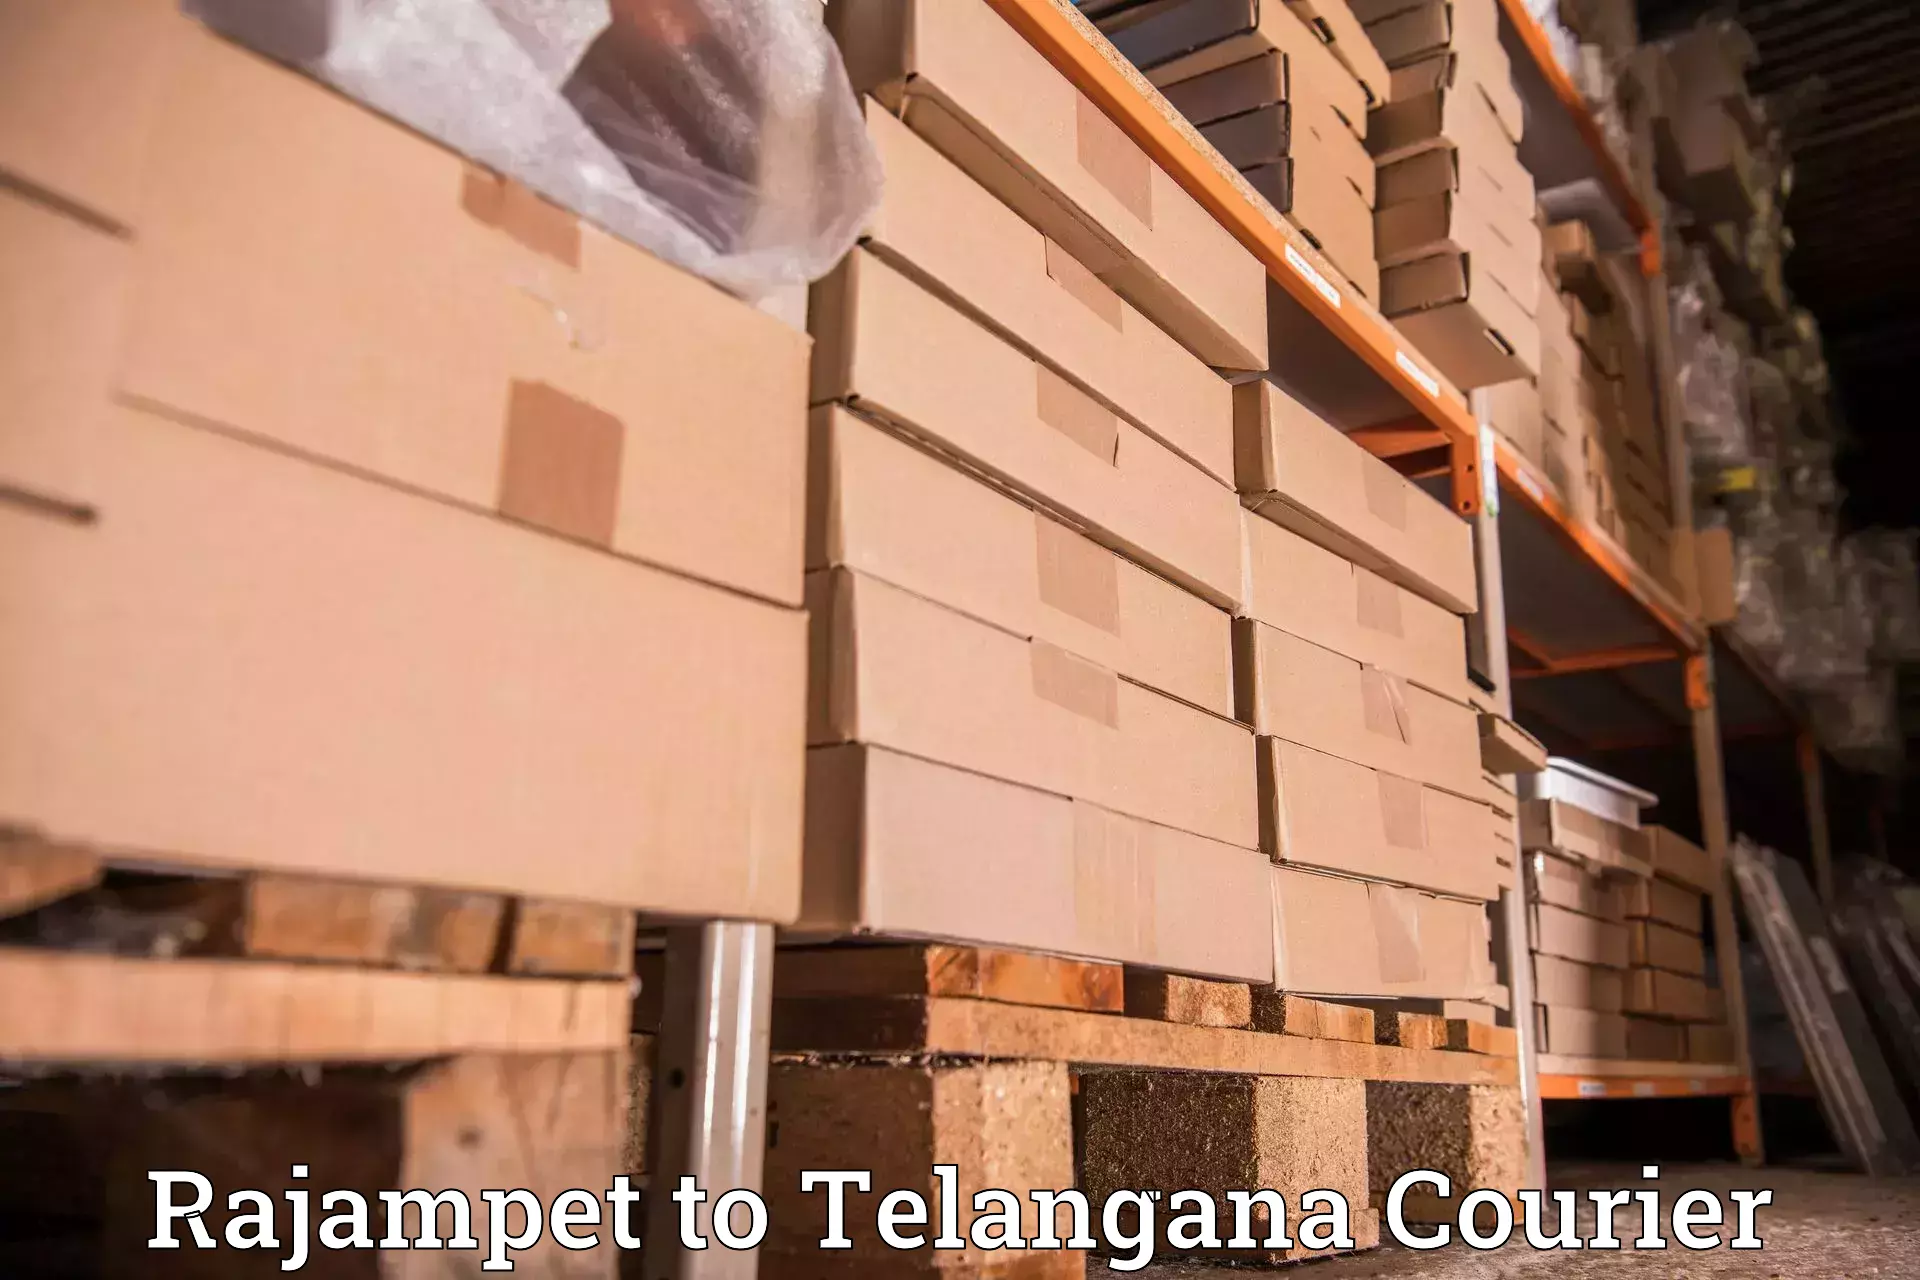 Courier service comparison Rajampet to Bellal Tarafa Bodhan